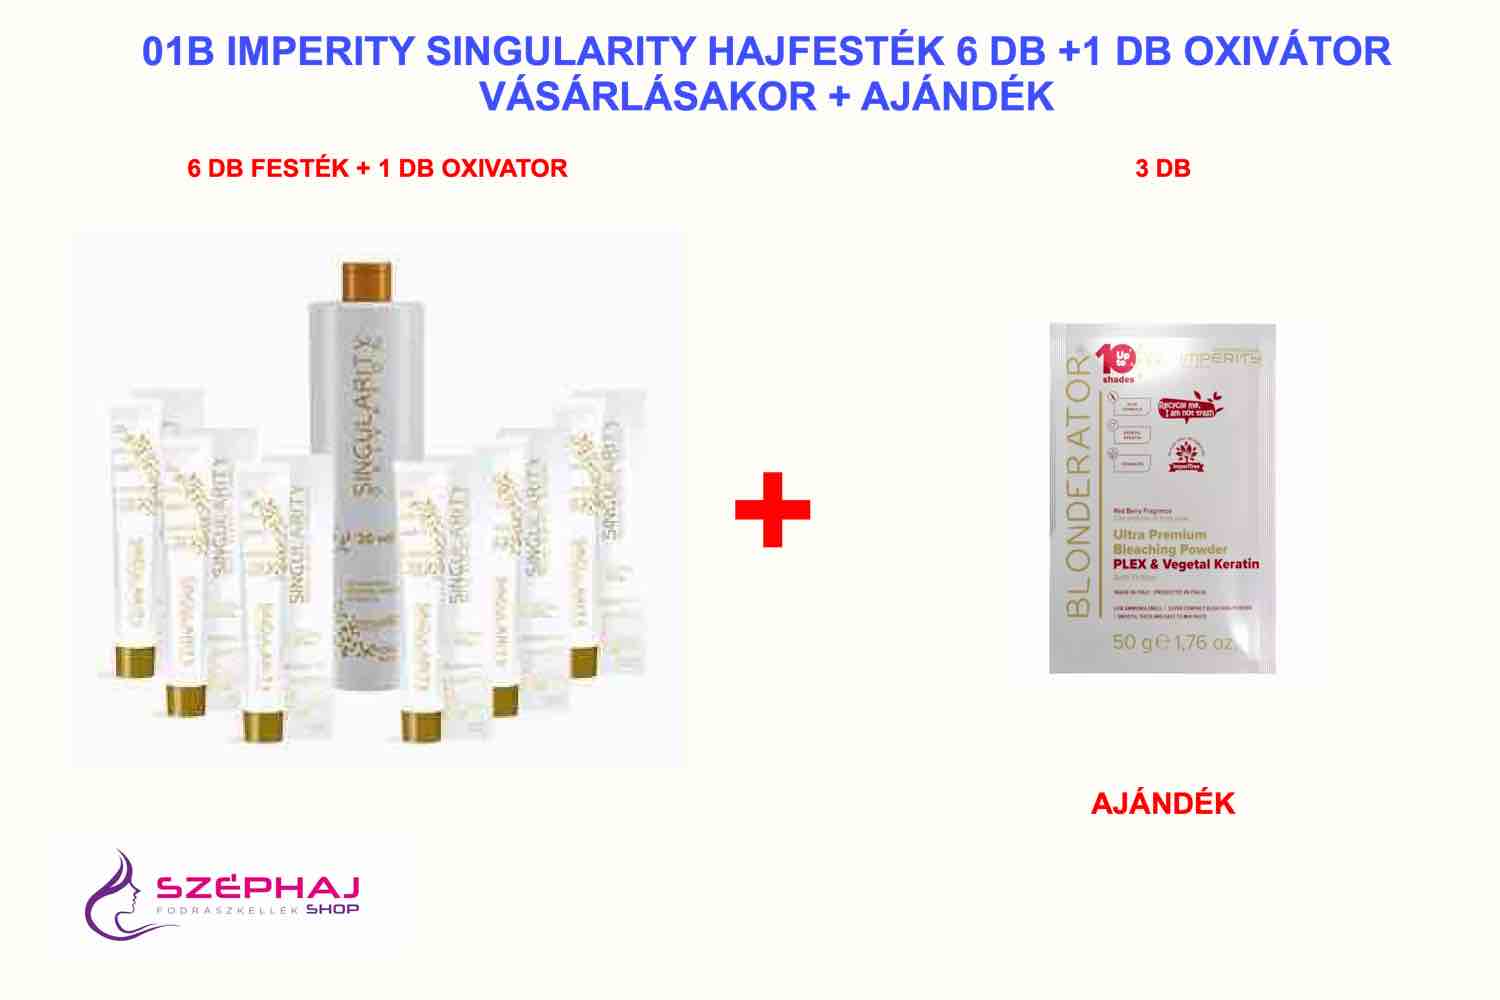 01B IMPERITY Singularity Hair Color Cream 100 ml 6+ AKCIÓ